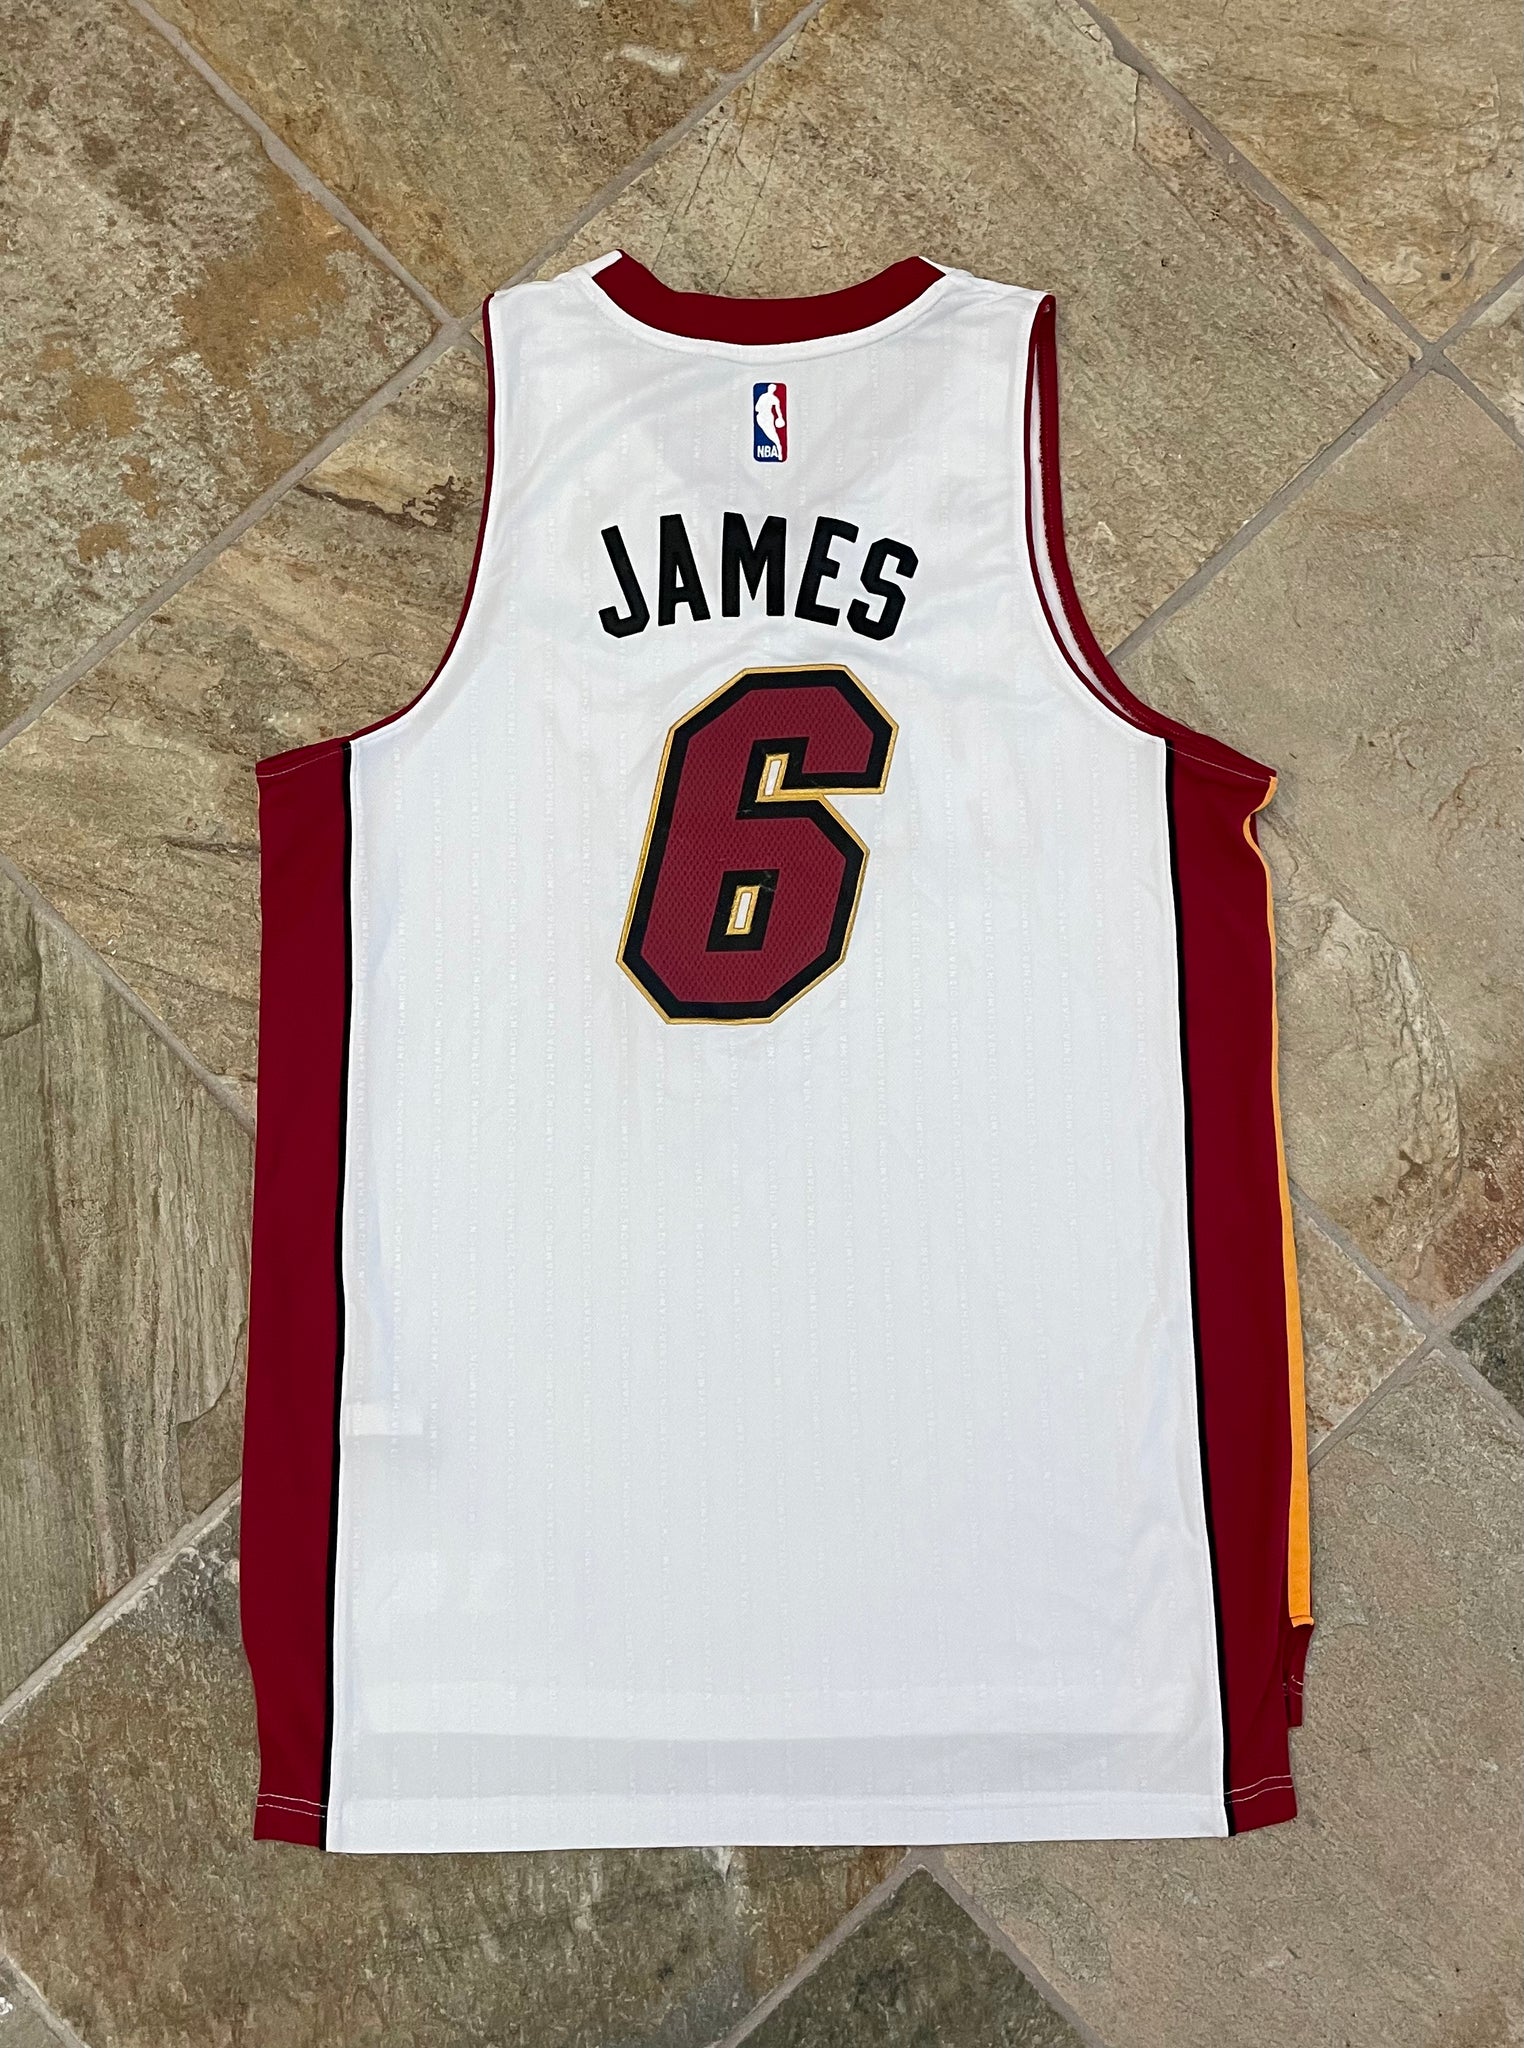 Adidas NBA Miami Heat LeBron James 2012 Champions Basketball